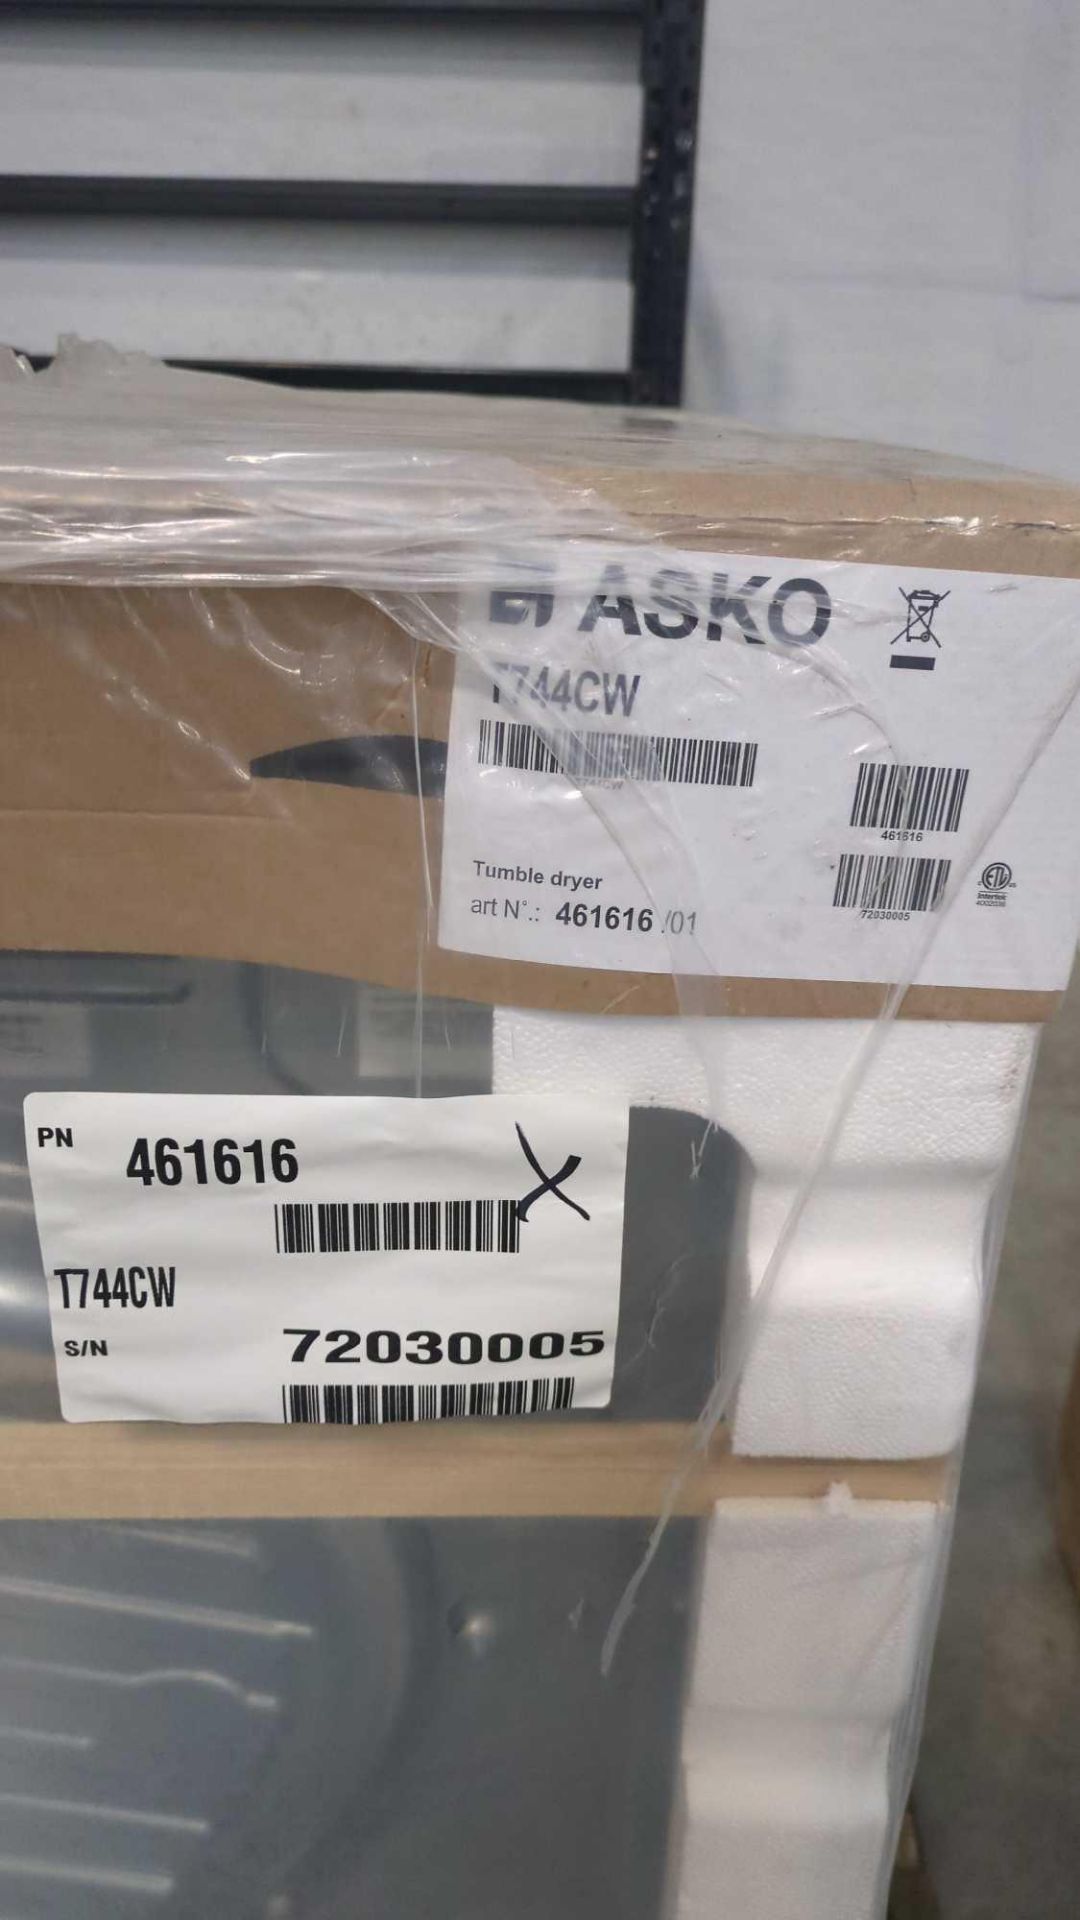 Asko Dryer T744CW - Image 2 of 4